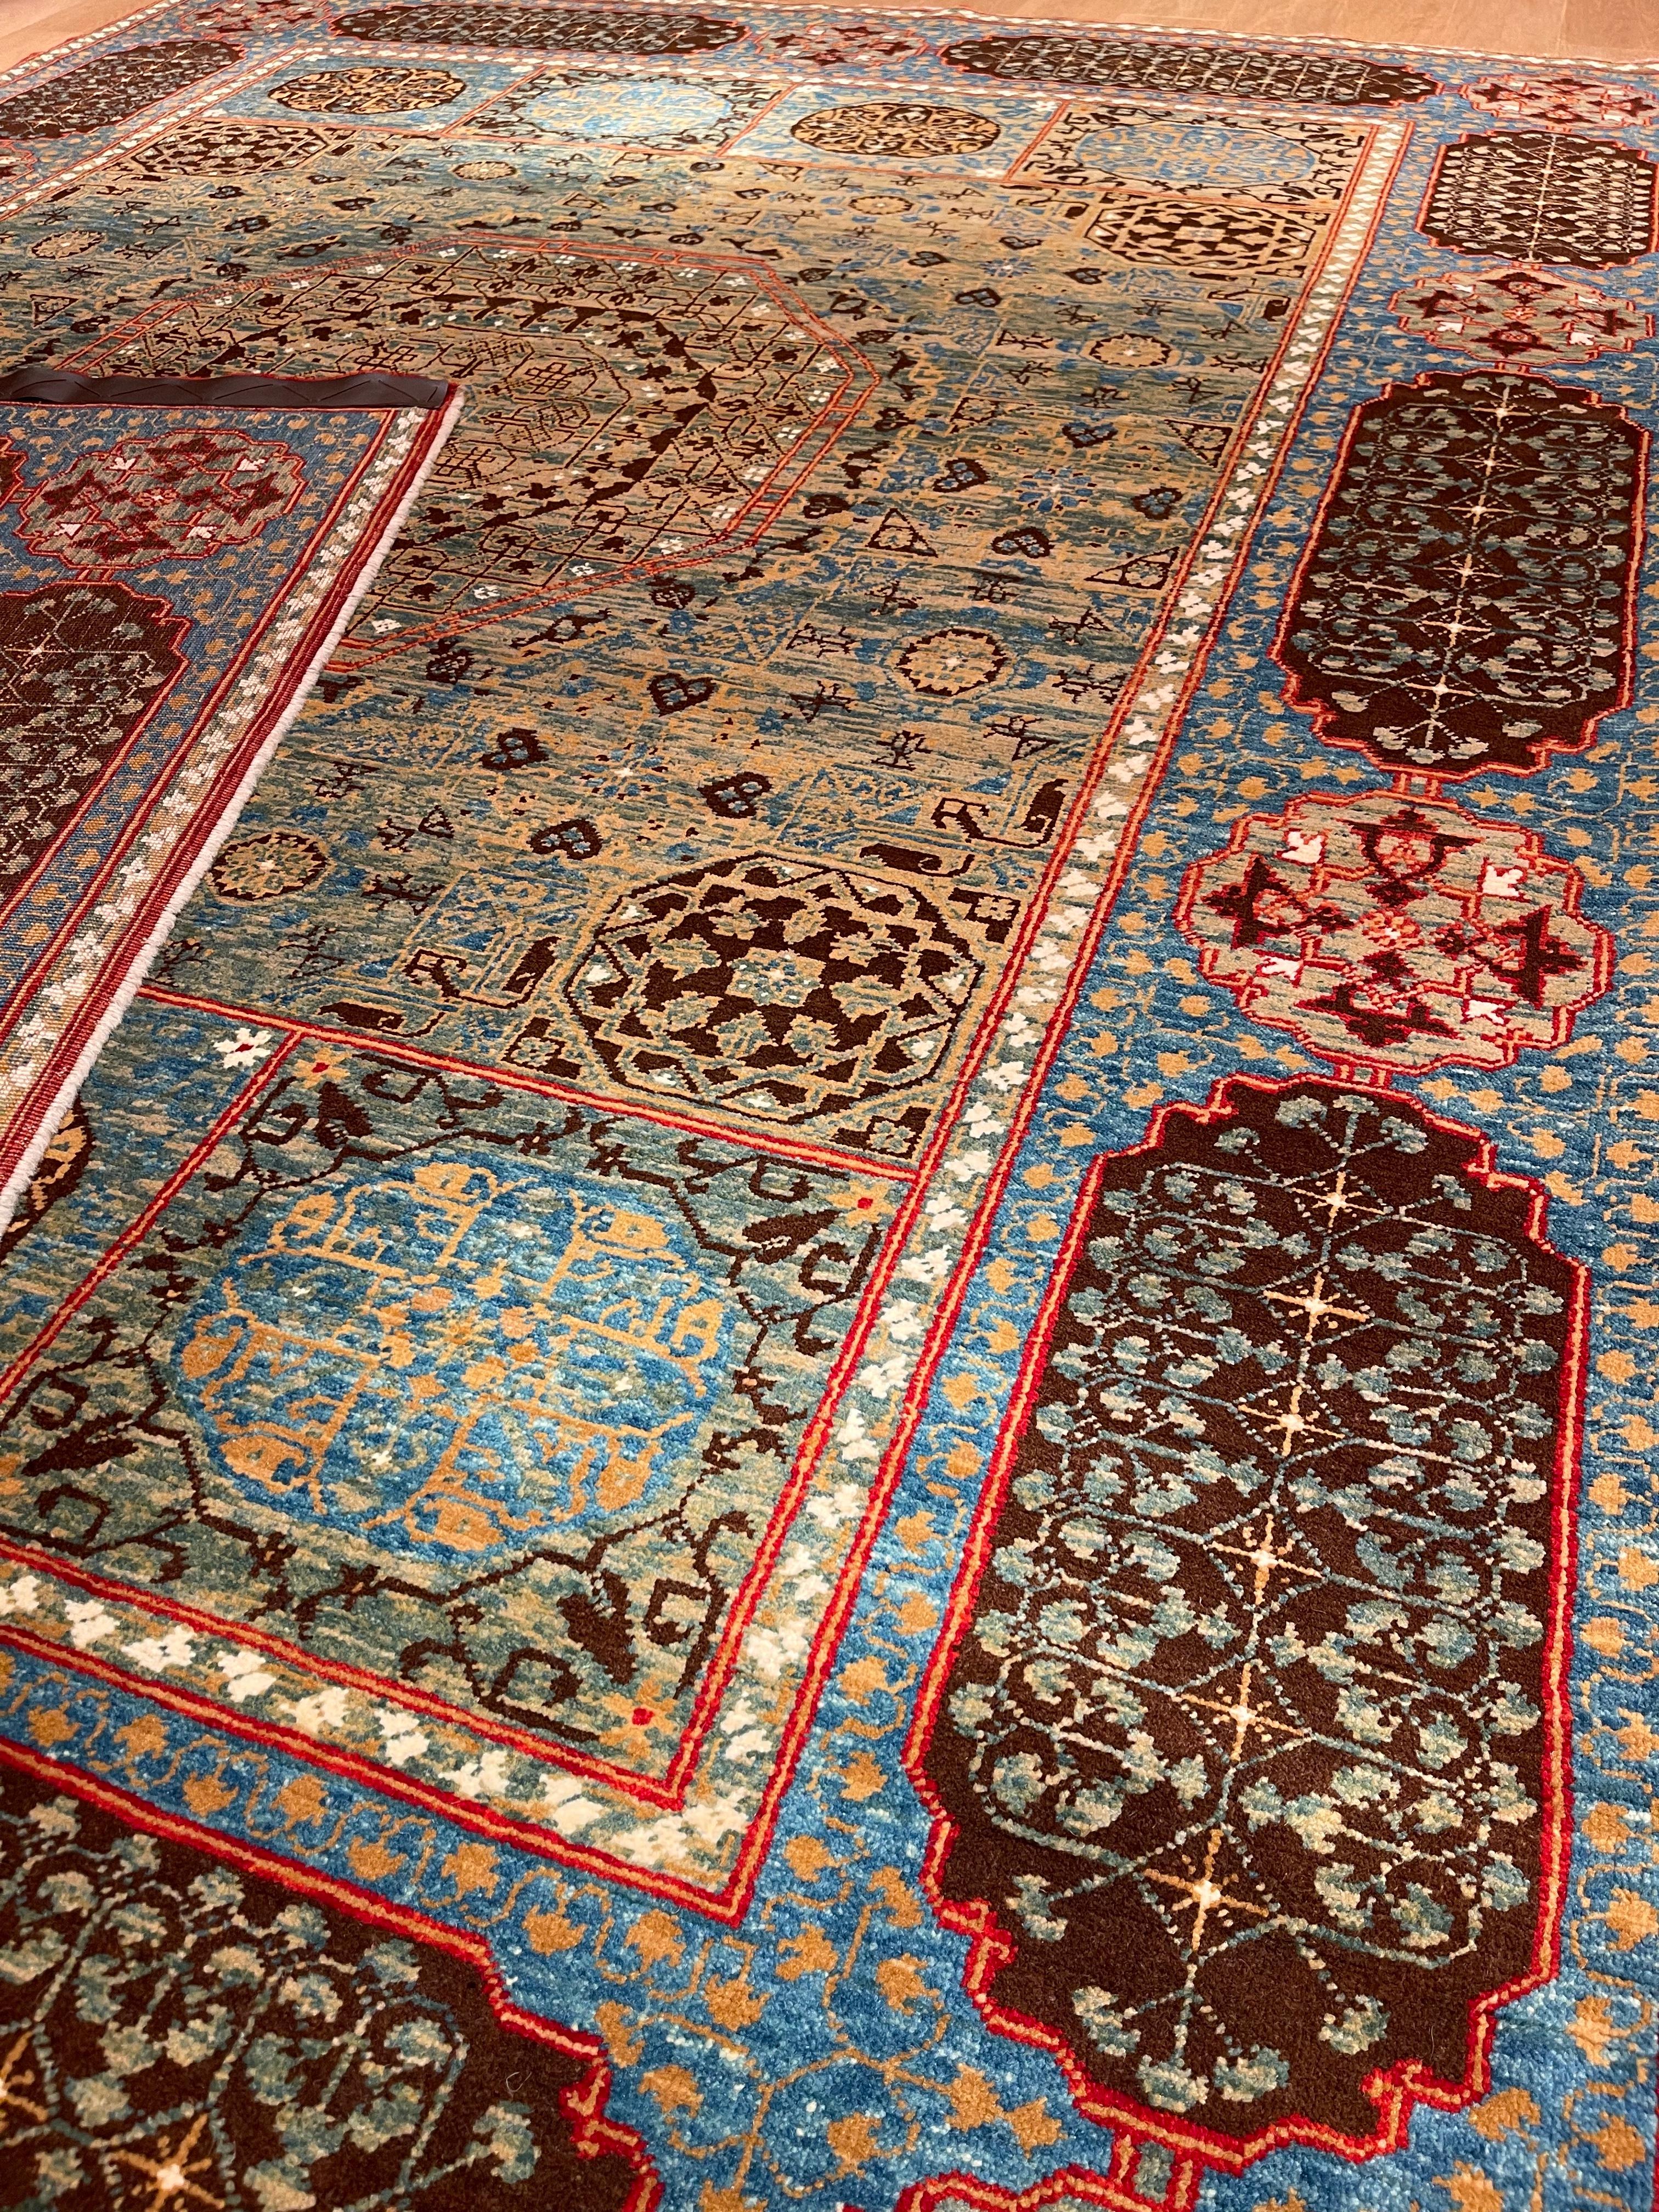 Vegetable Dyed Ararat Rugs the Simonetti Mamluk Carpet 16th Century Revival, Natural Dyed For Sale